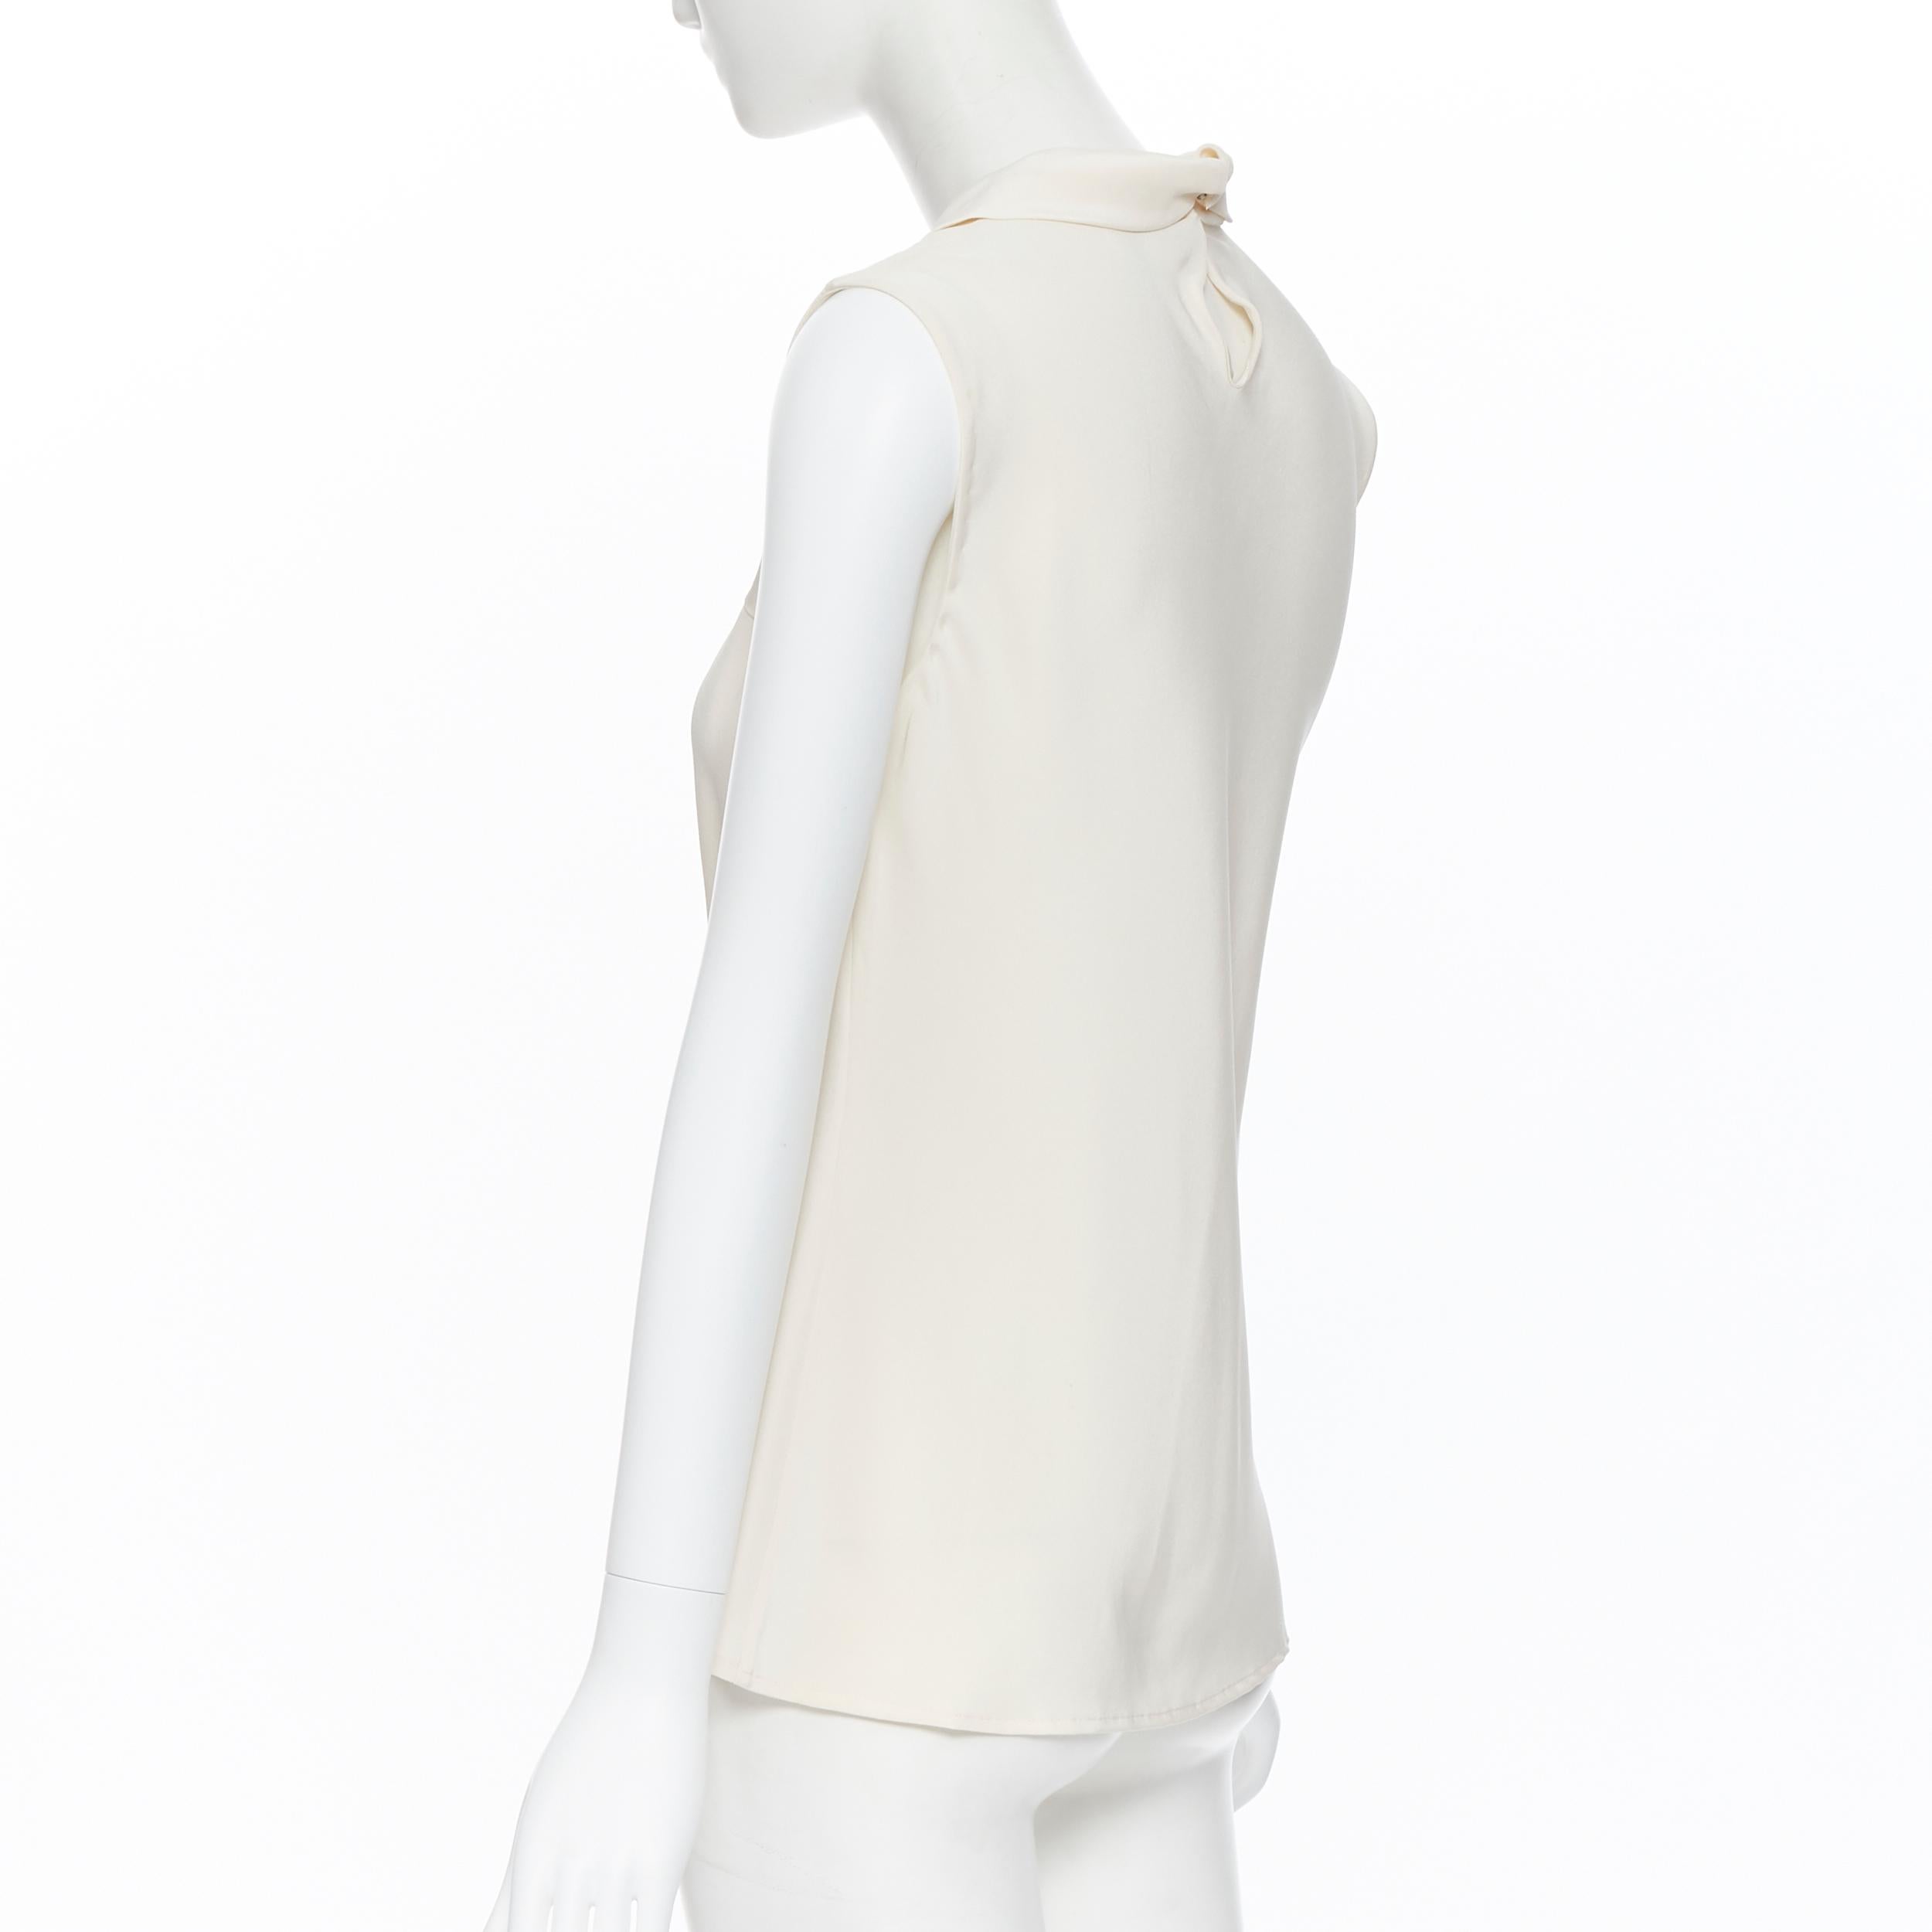 OSCAR DE LA RENTA R13 100% silk beige cream knot neckline sleeveless top US4 2